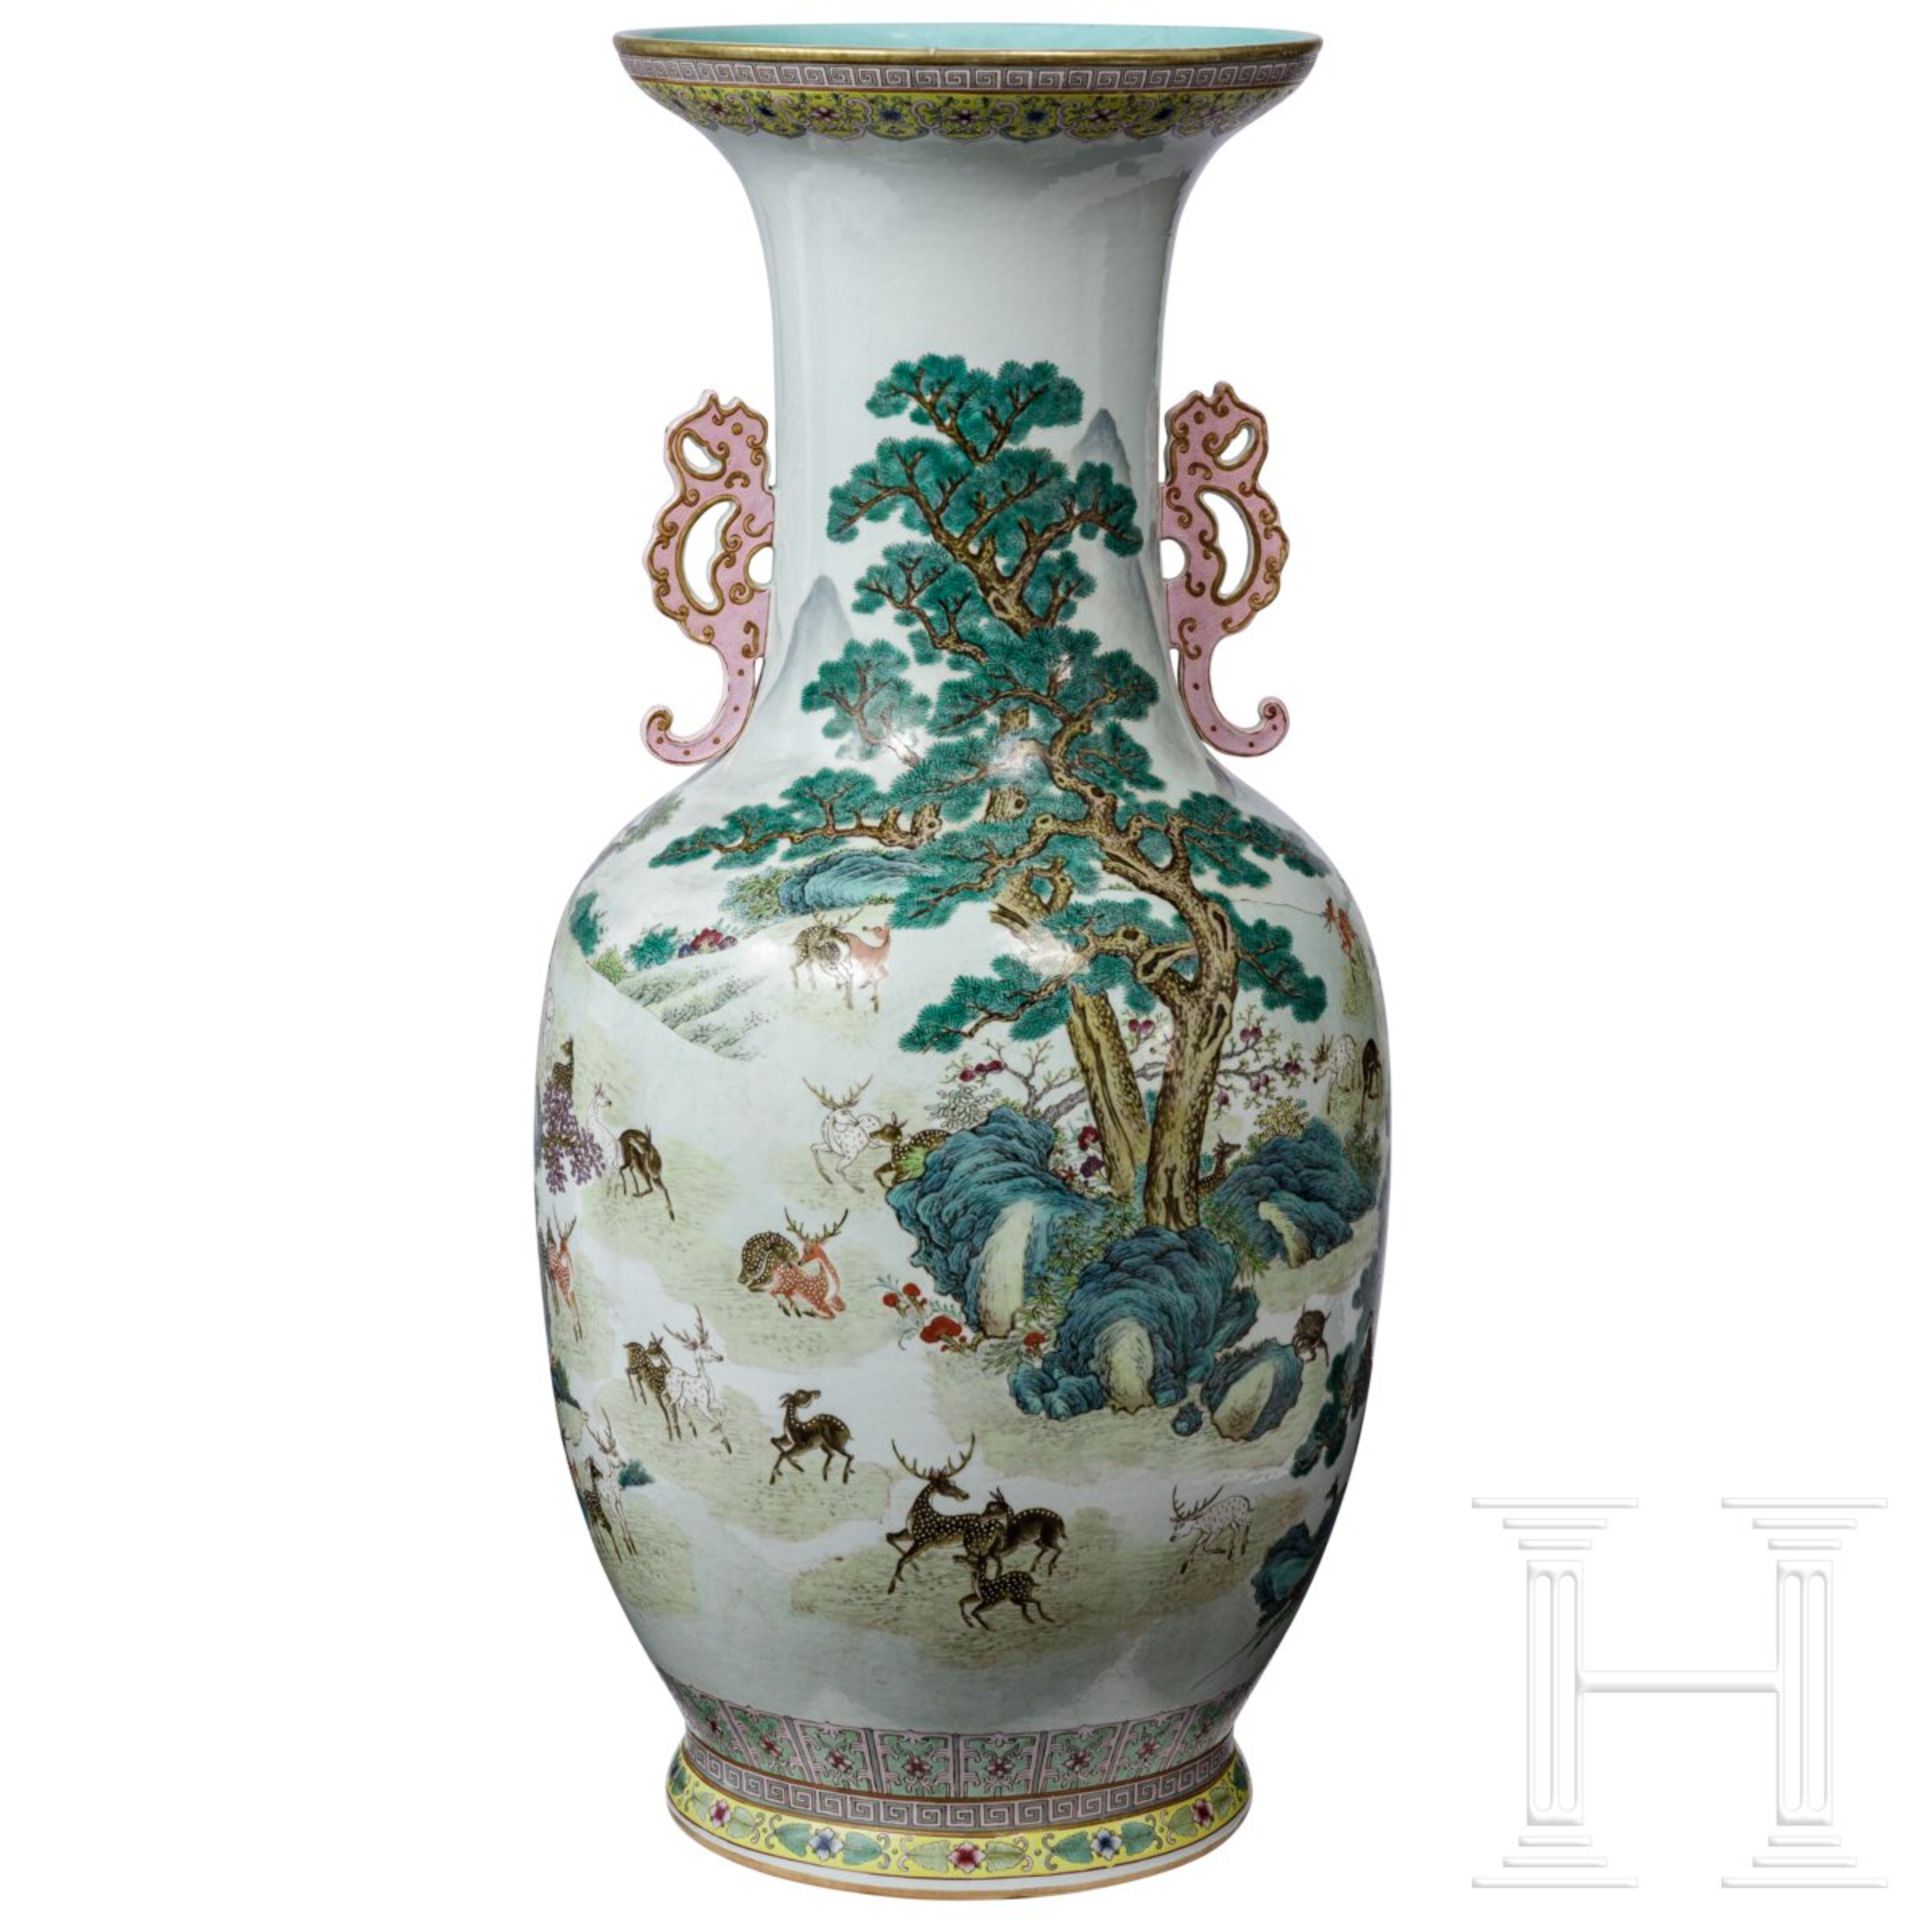 Monumentale Famille-rose-Vase mit "Hundert-Hirsche-Dekor", späte Qing-Dynastie oder frühe Republik, 